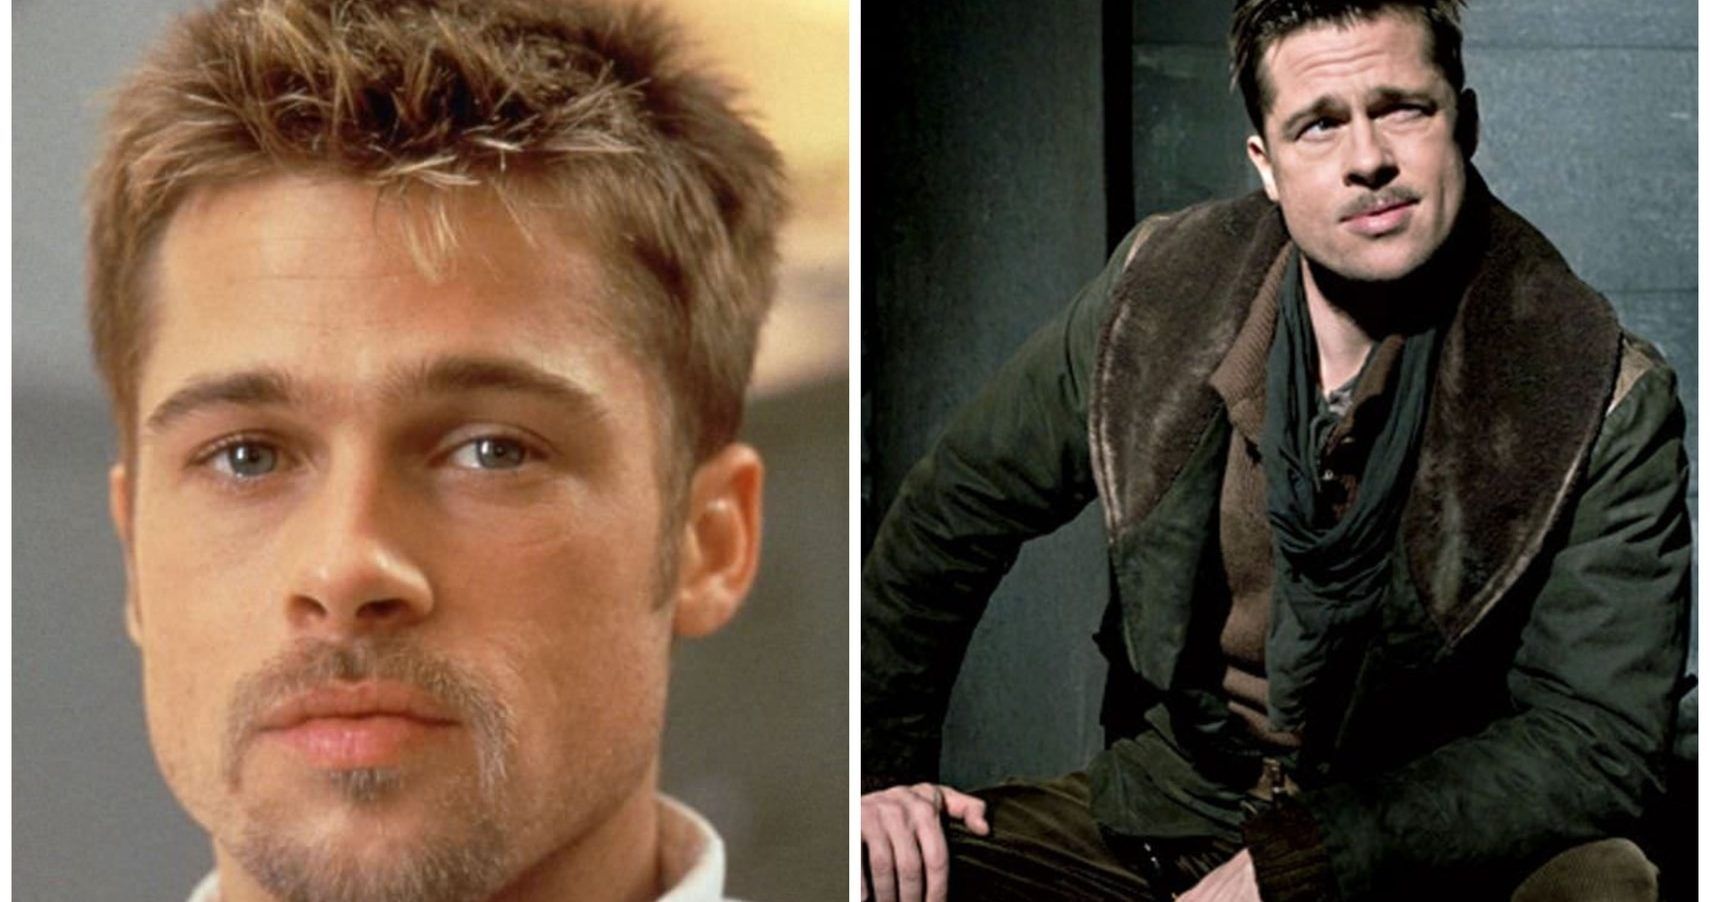 Top 10 Brad Pitt Performances